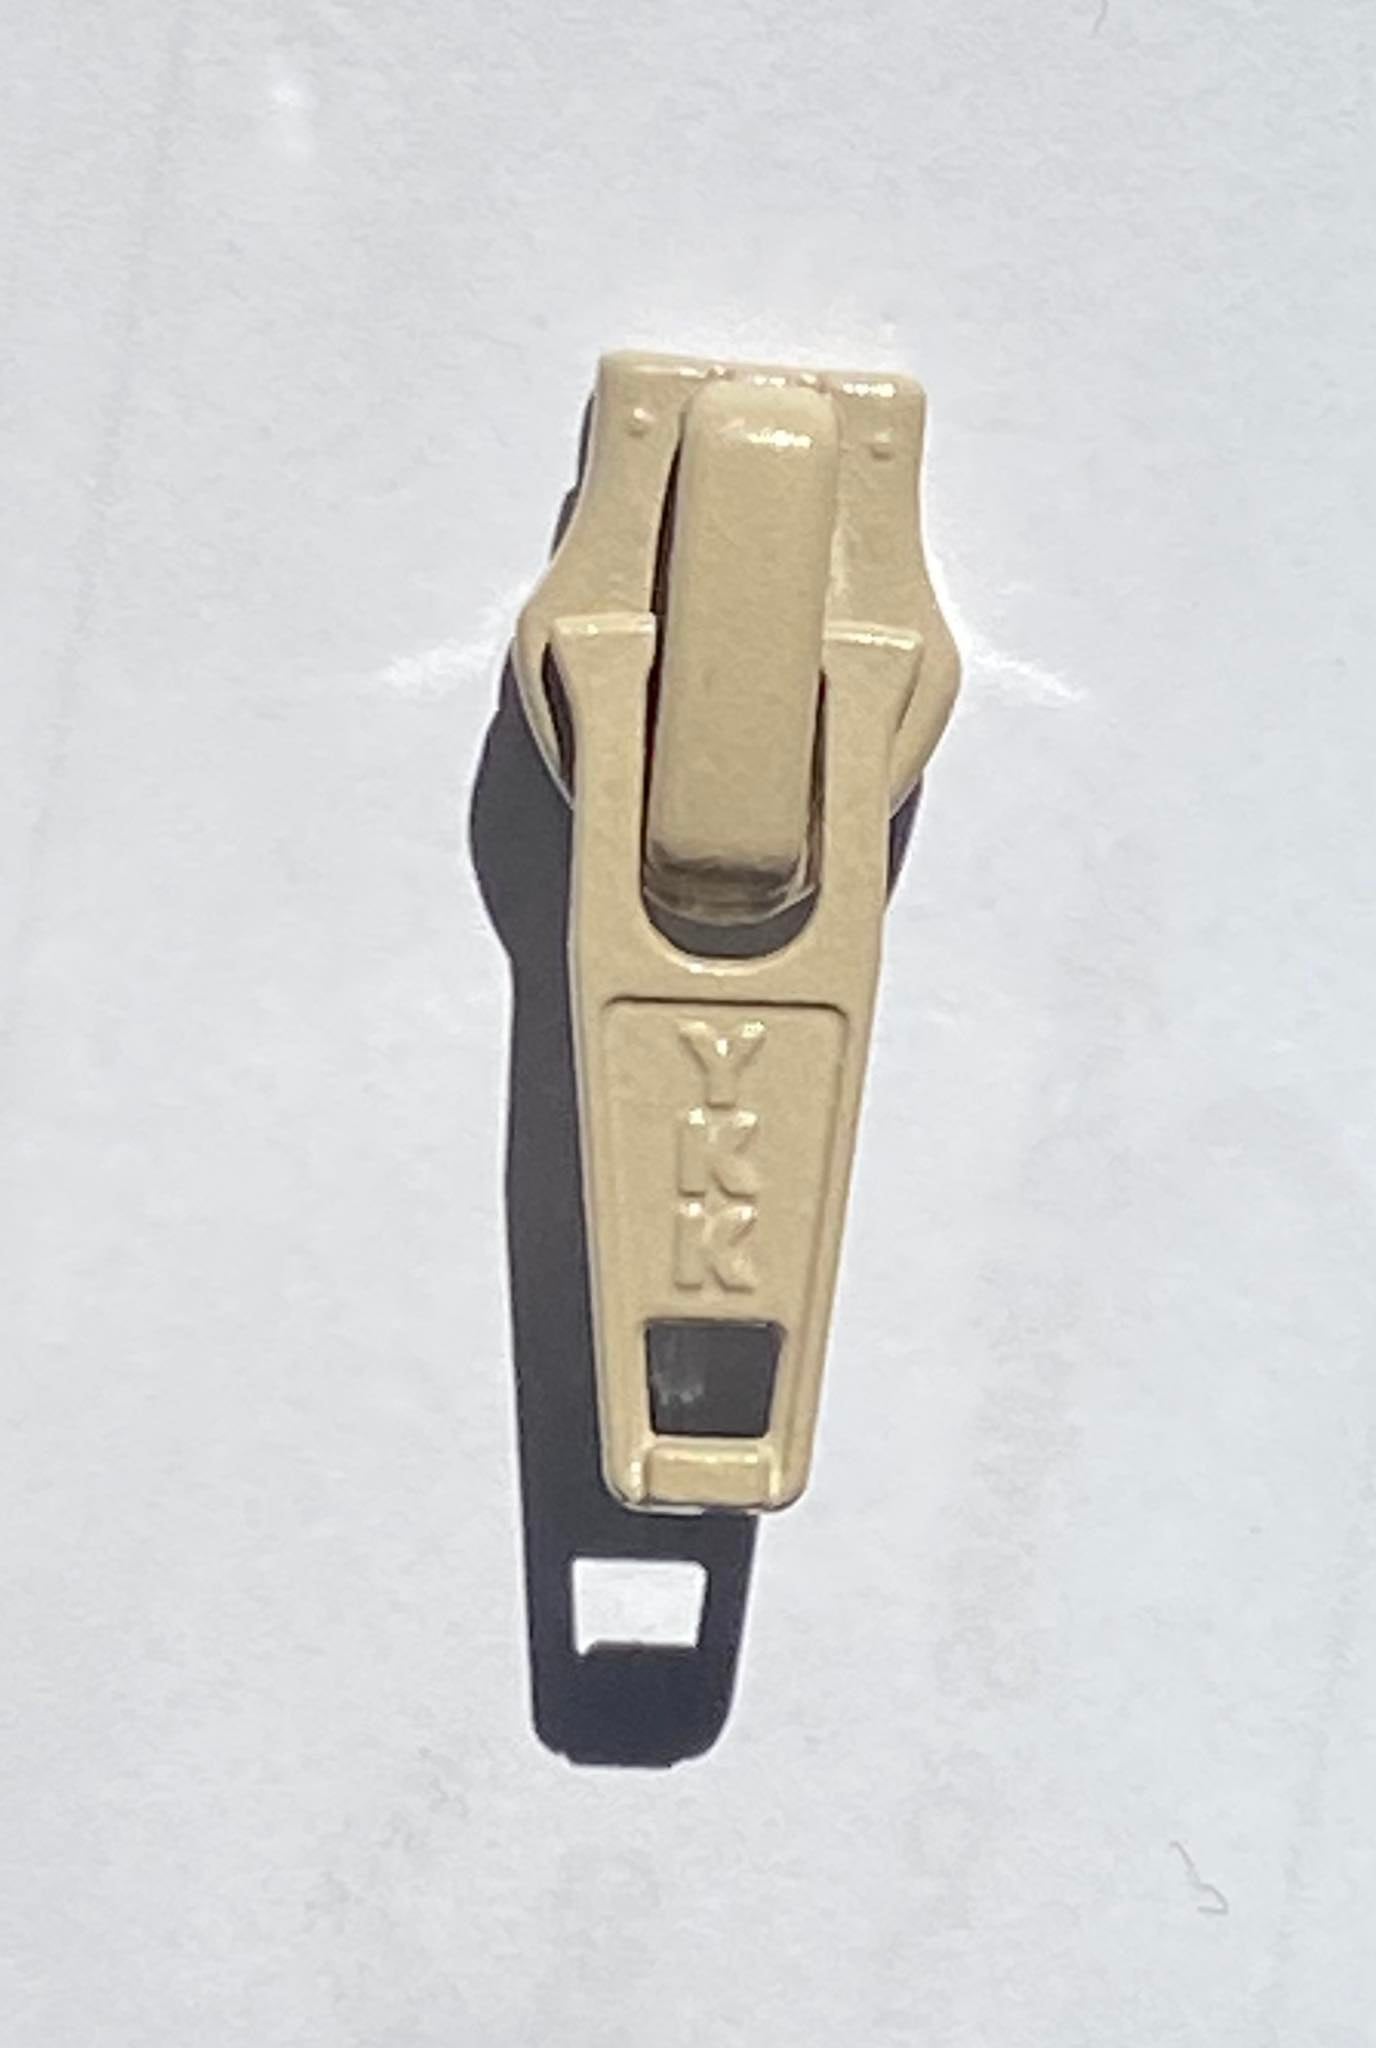 YKK Metal Zip Sliders Coil